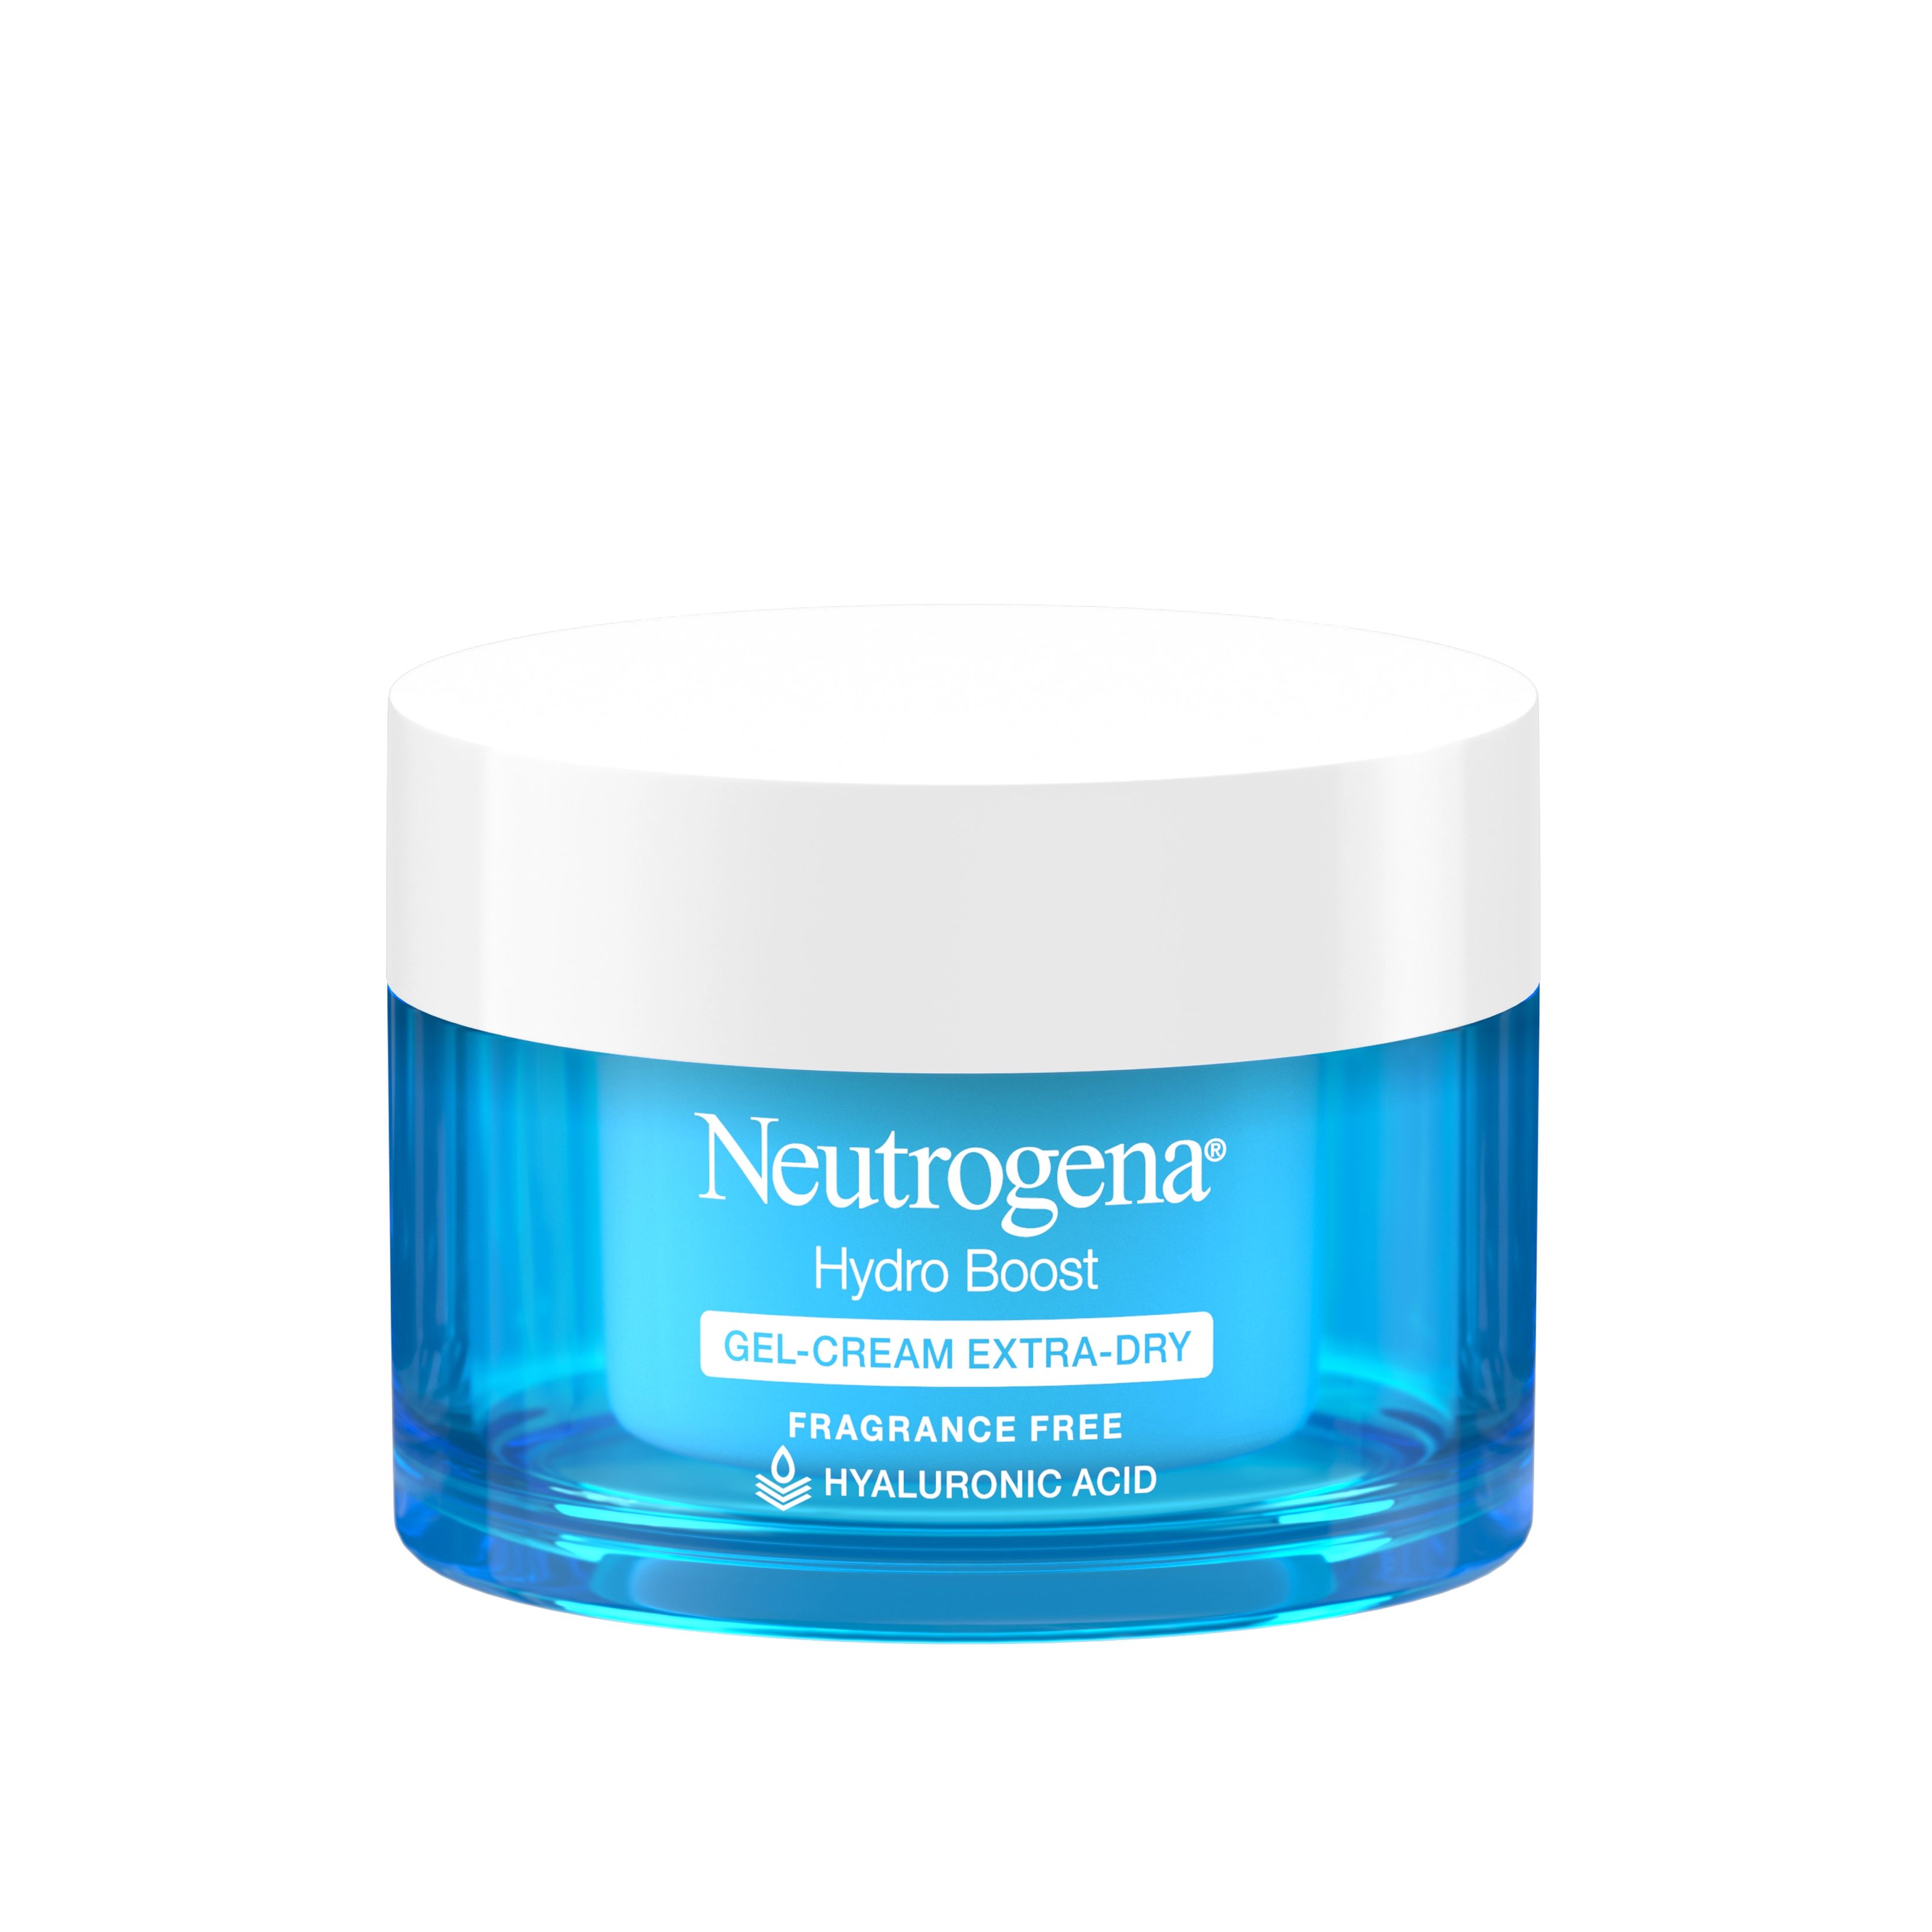 Neutrogena® Hydro Boost Gel-Cream with Hyaluronic Acid for Extra-Dry Skin | Neutrogena